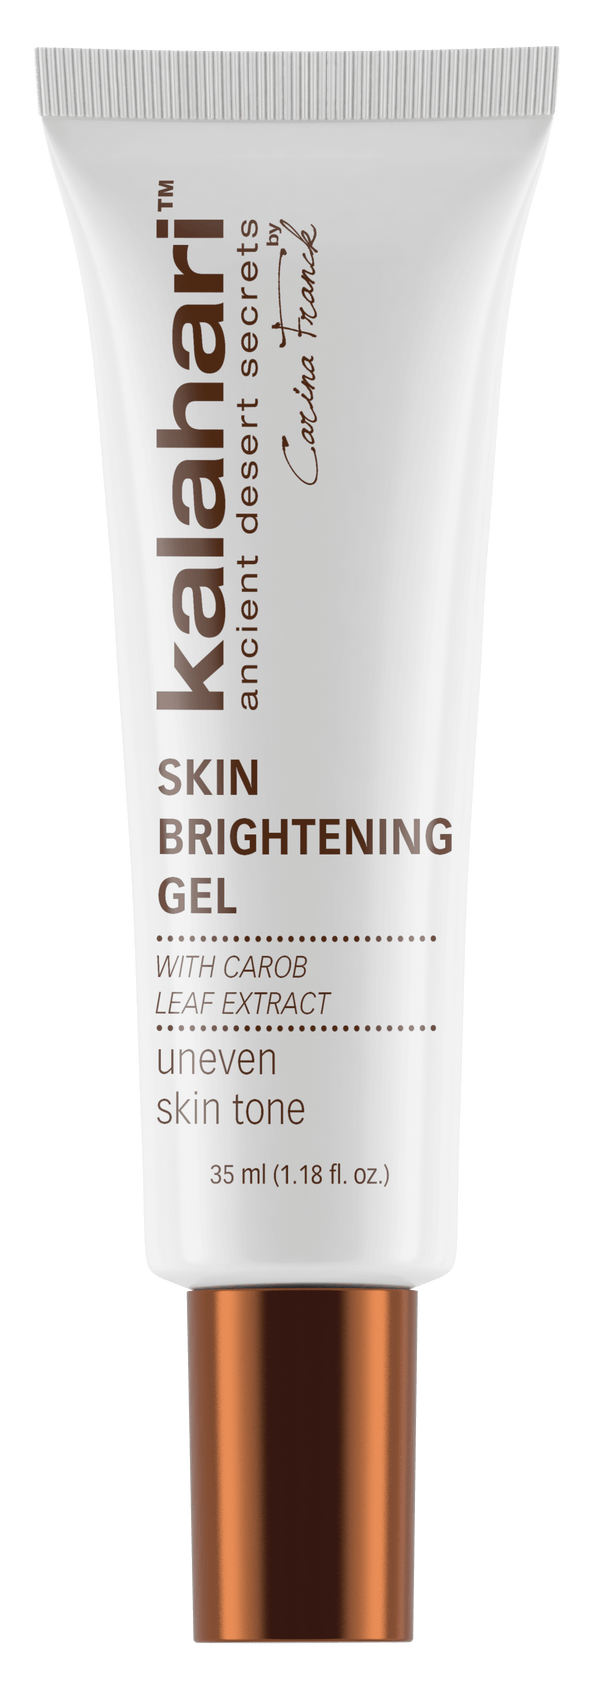 Skin brightening gel